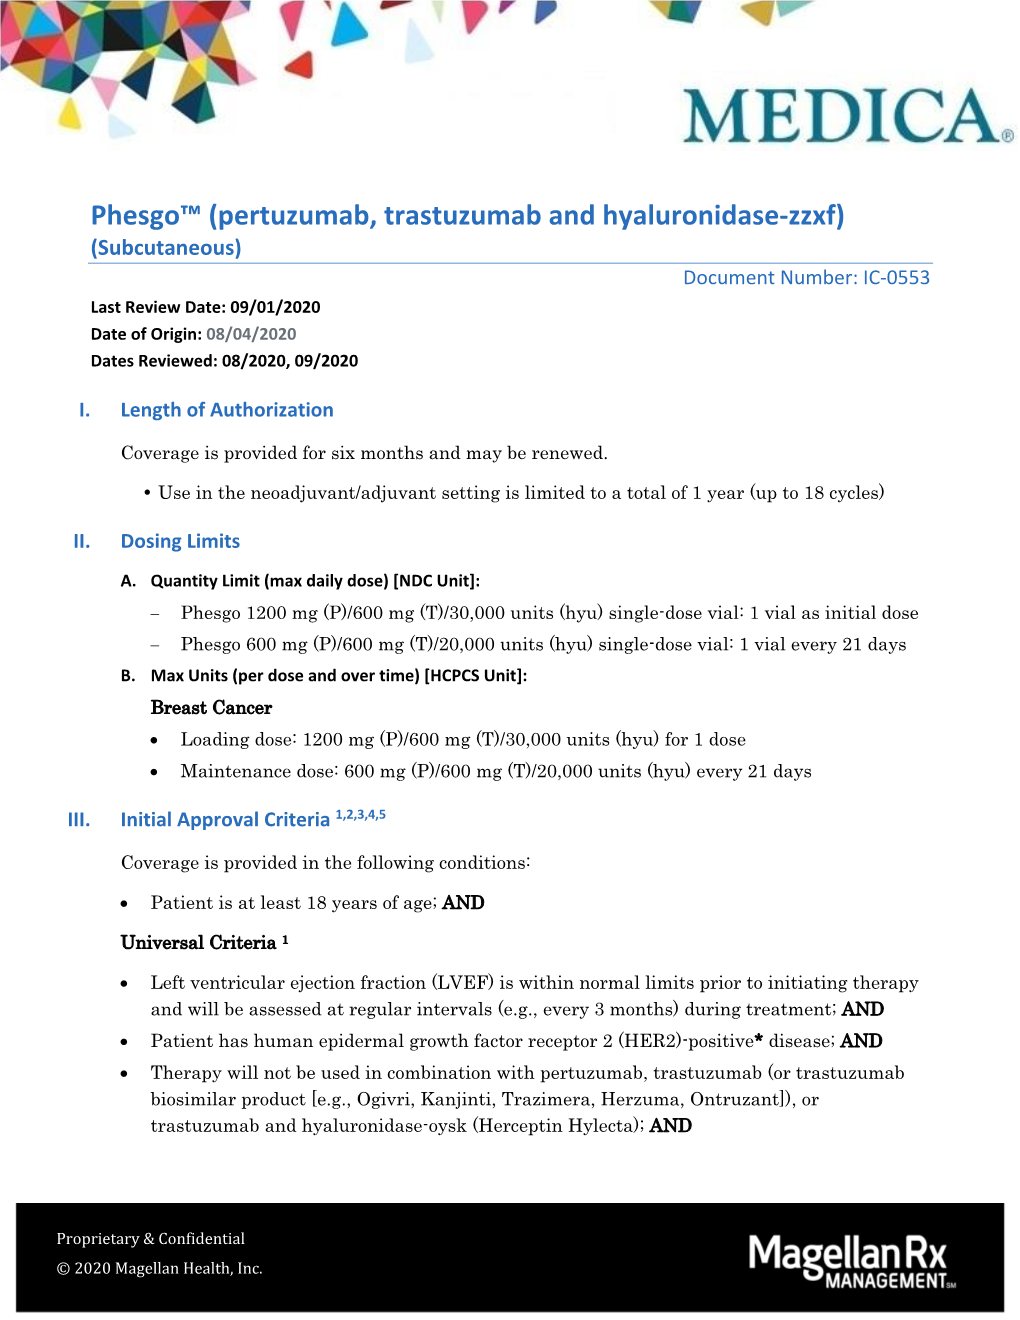 Phesgo™ (Pertuzumab, Trastuzumab and Hyaluronidase-Zzxf)